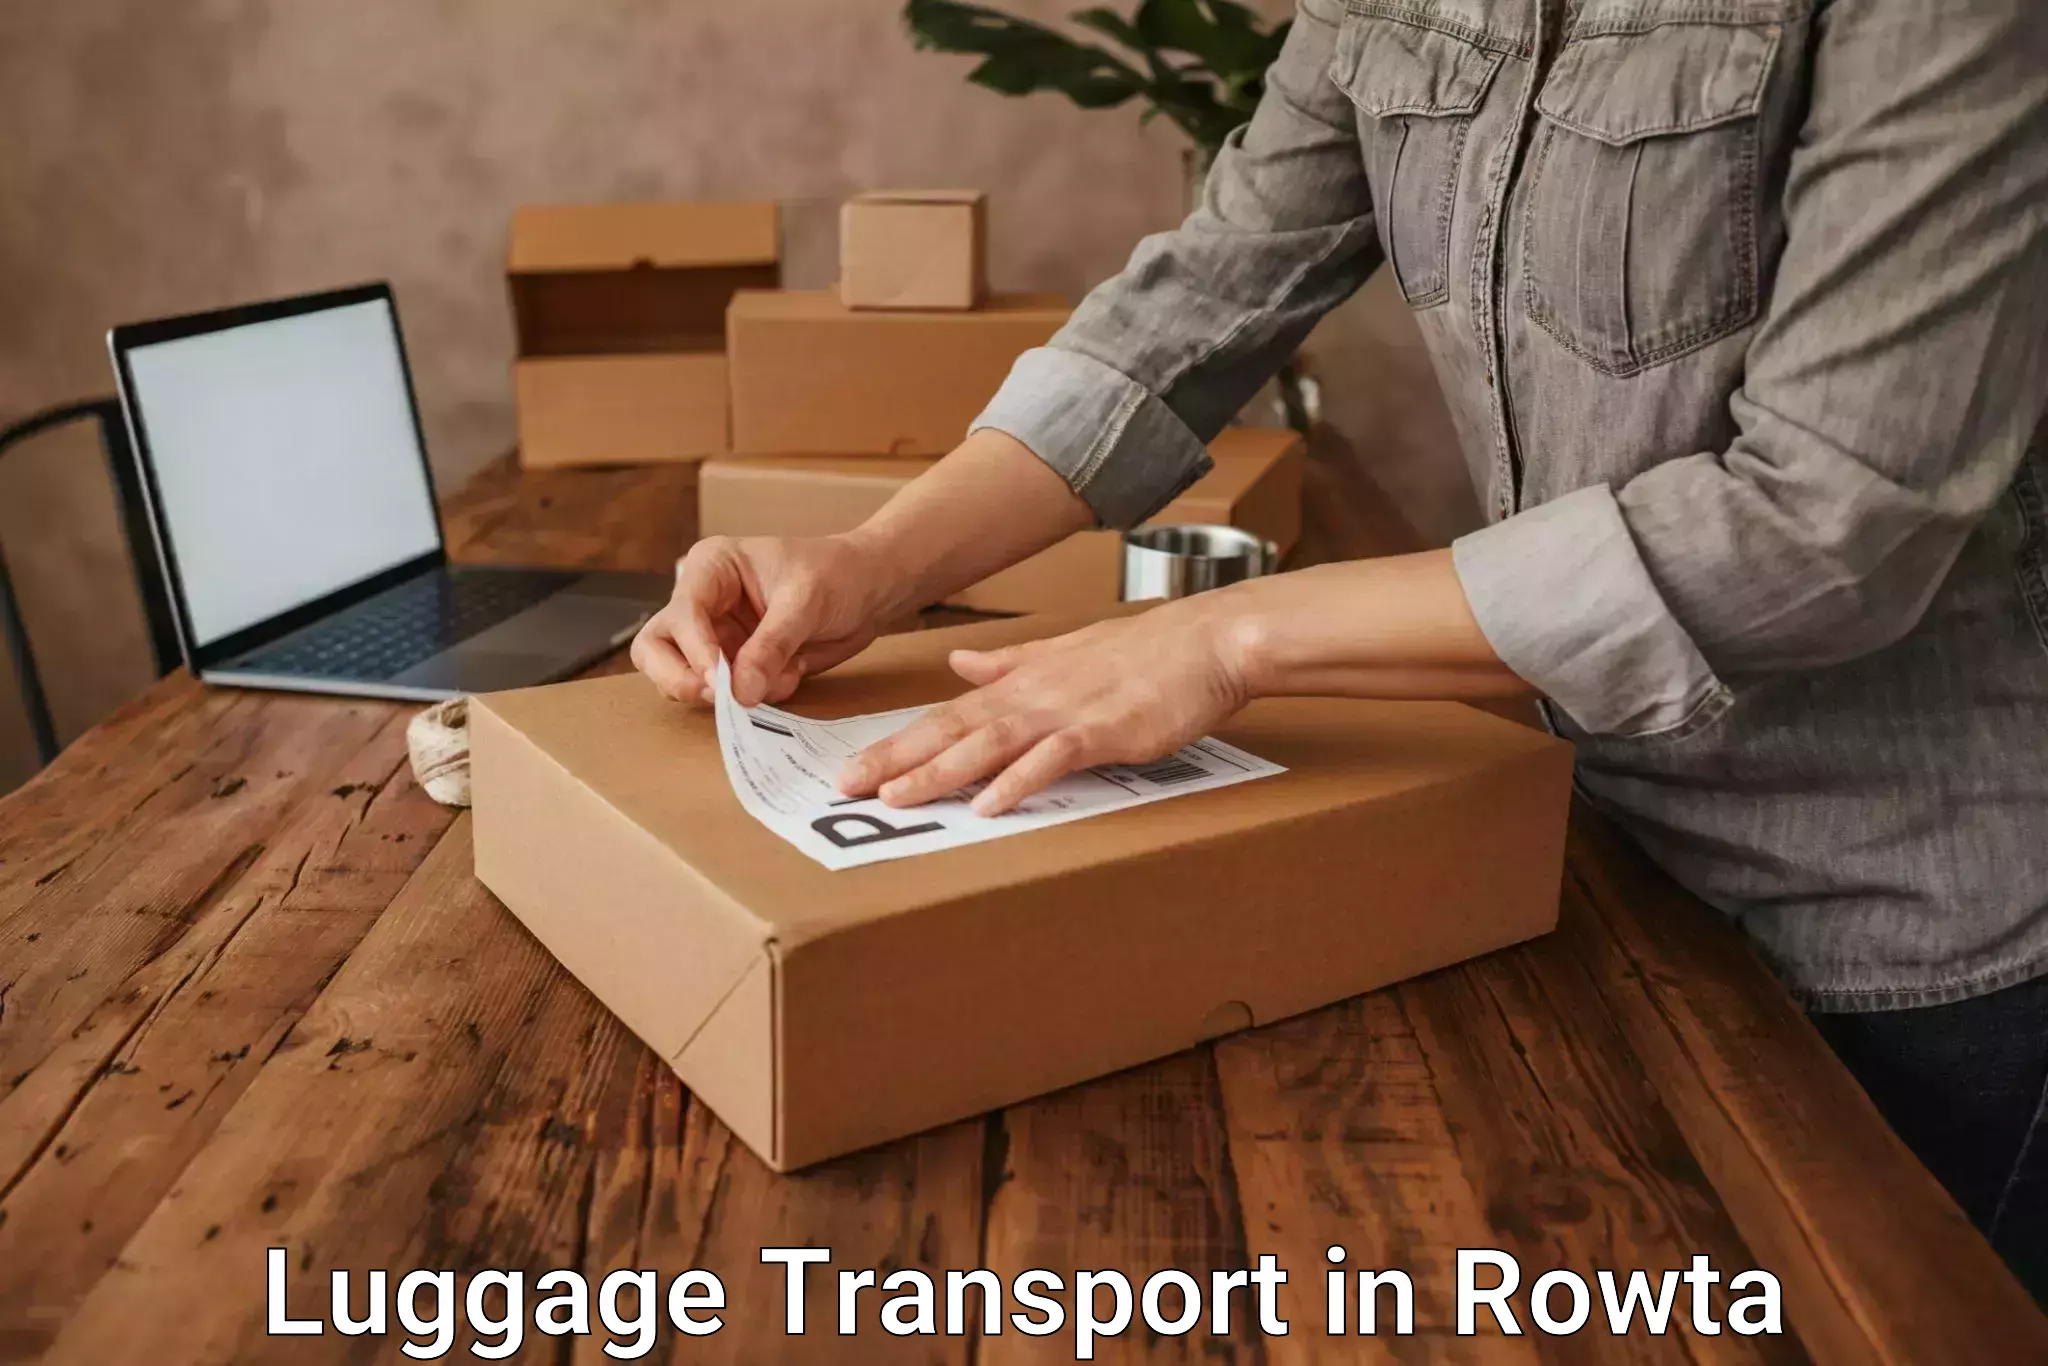 Luggage shipment processing in Rowta